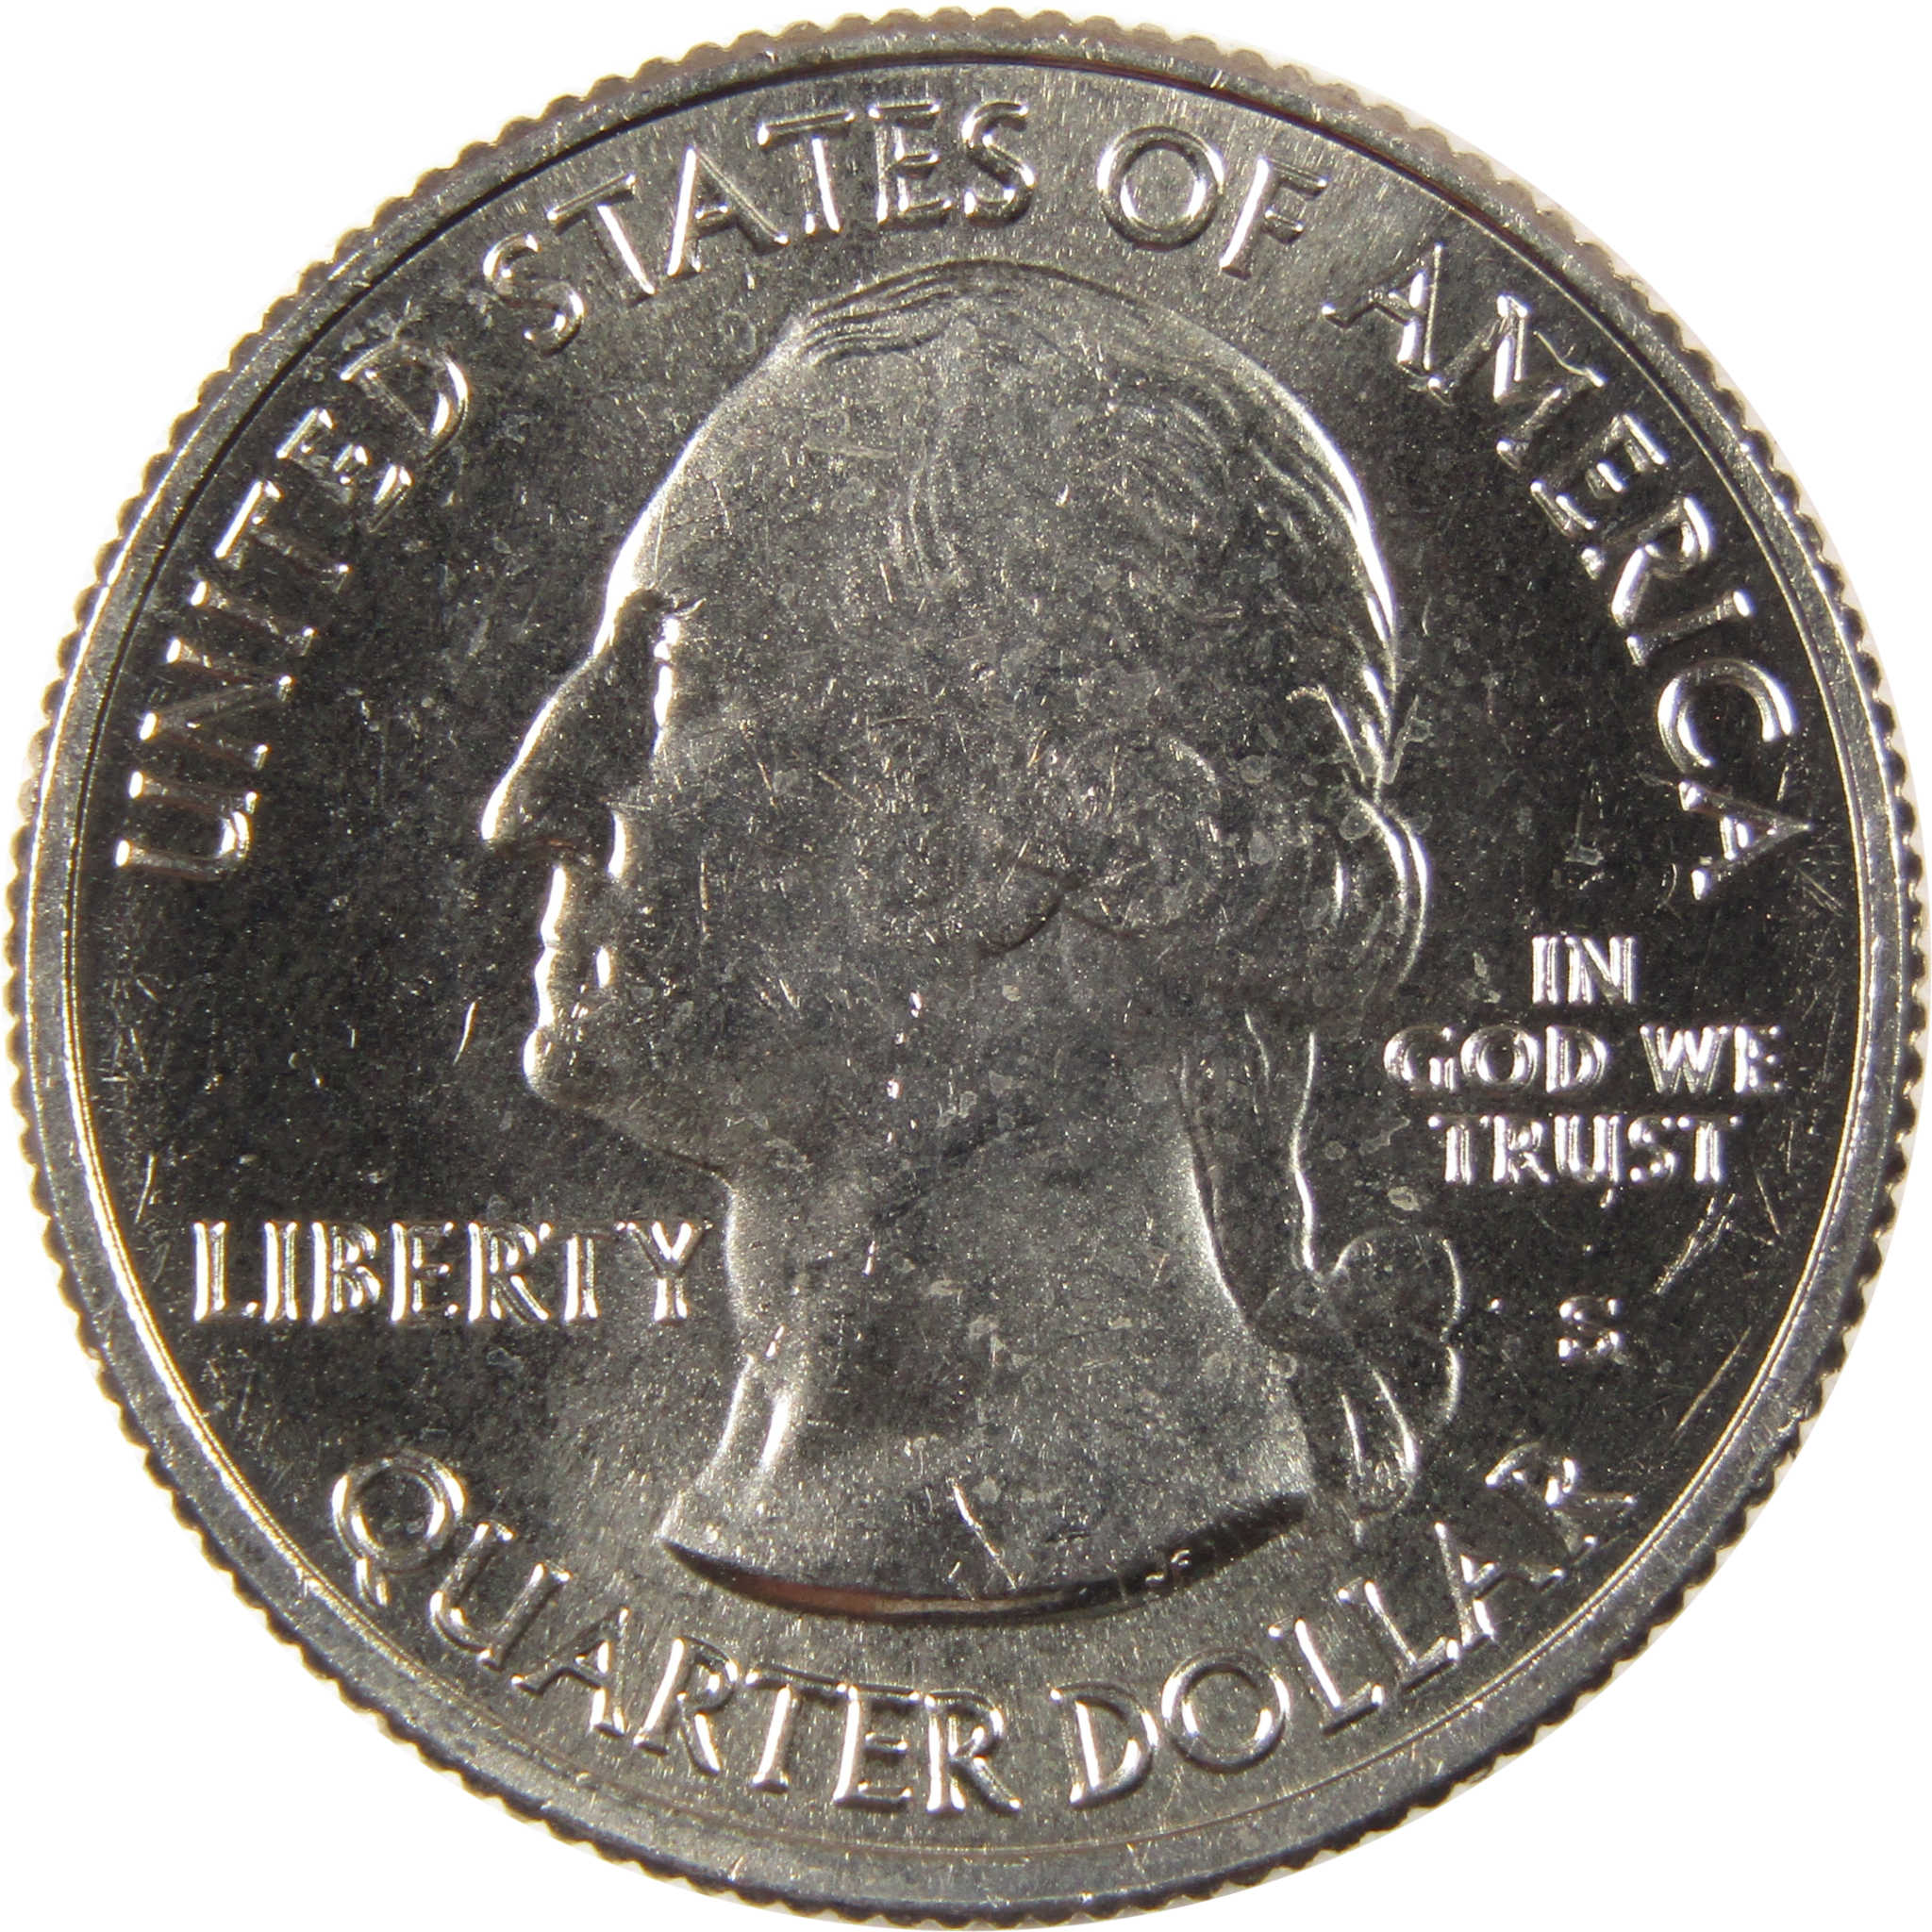 2012 S Acadia National Park Quarter BU Uncirculated Clad 25c Coin